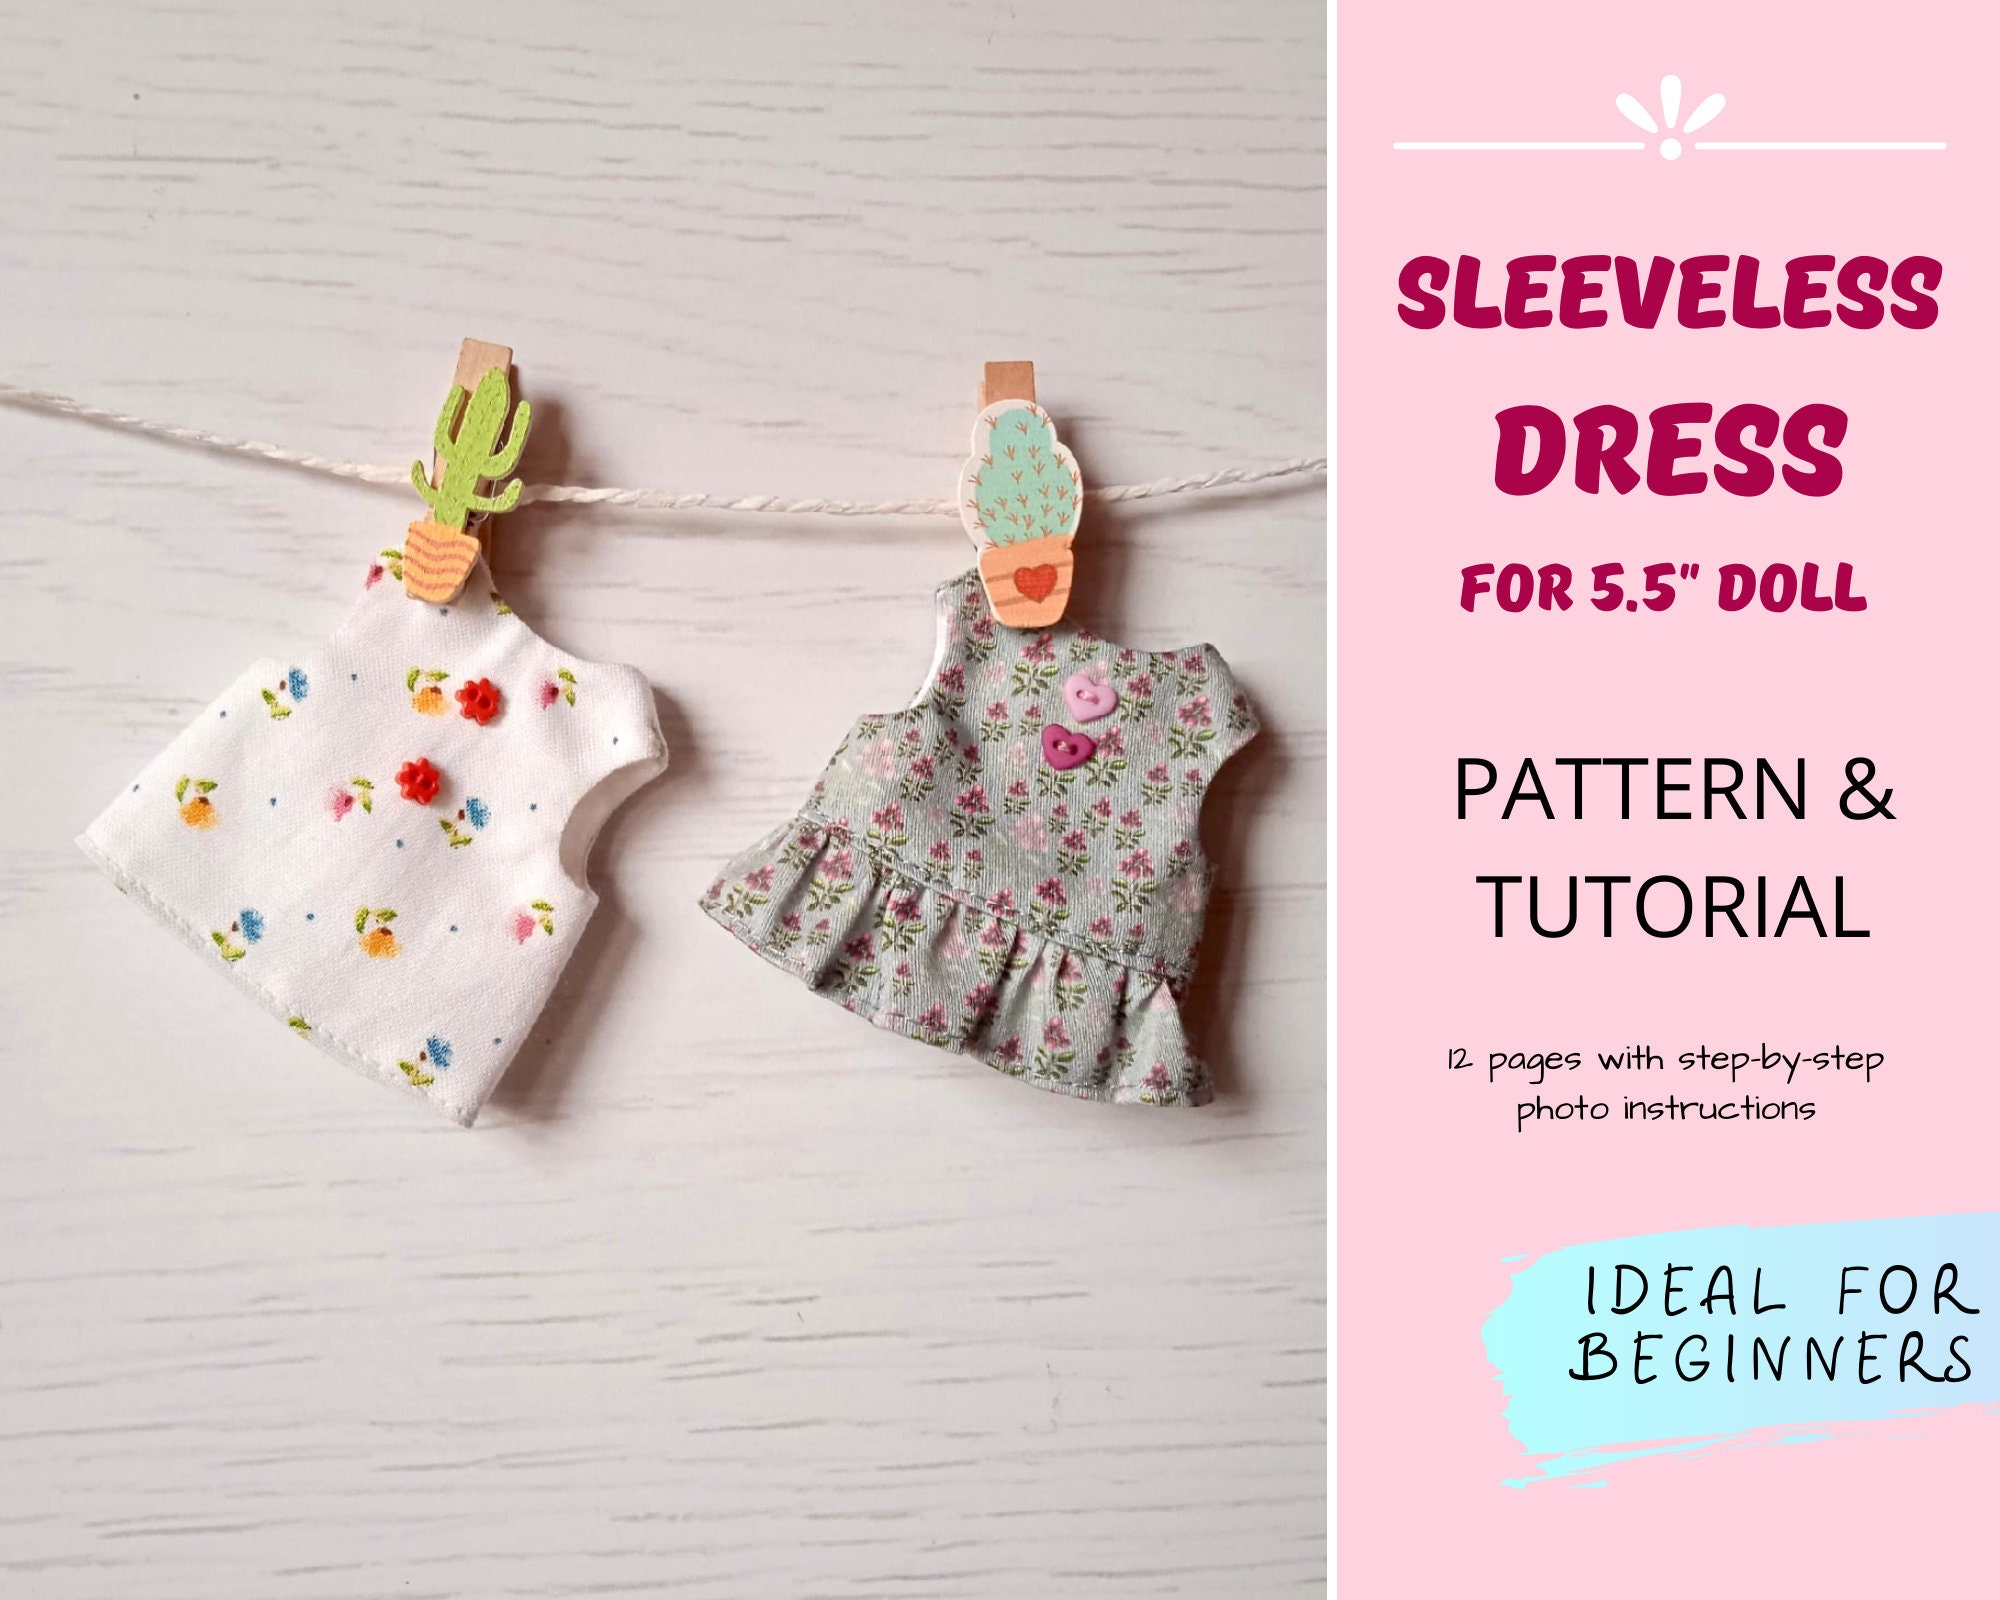 DIY  Needle Case Sewing Tutorial + FREE Pattern Download!!! • Sami Doll  Tutorials 